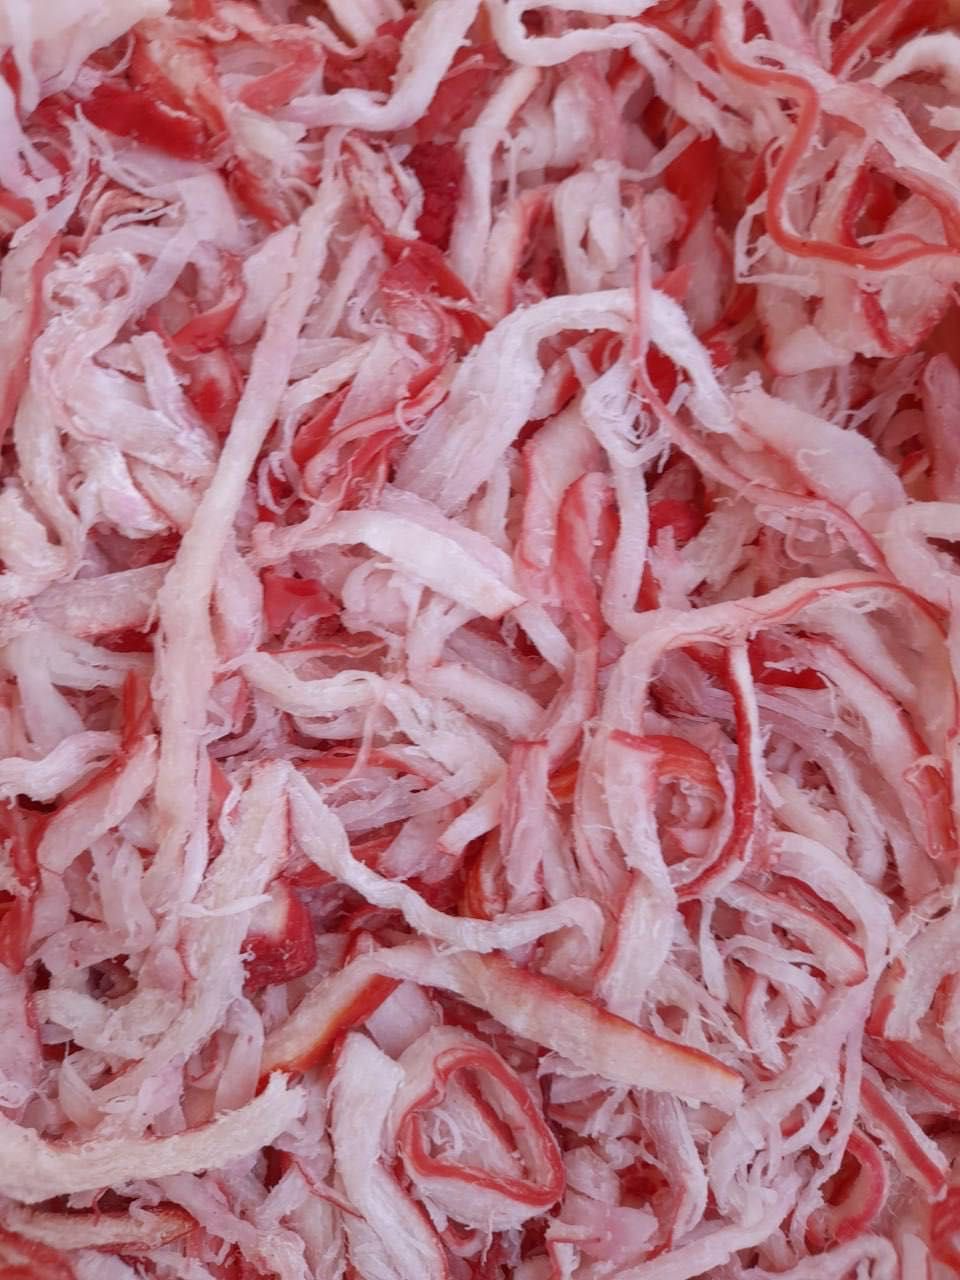 Global Food Trading oficjalny importer suszona solona ryba kalmary